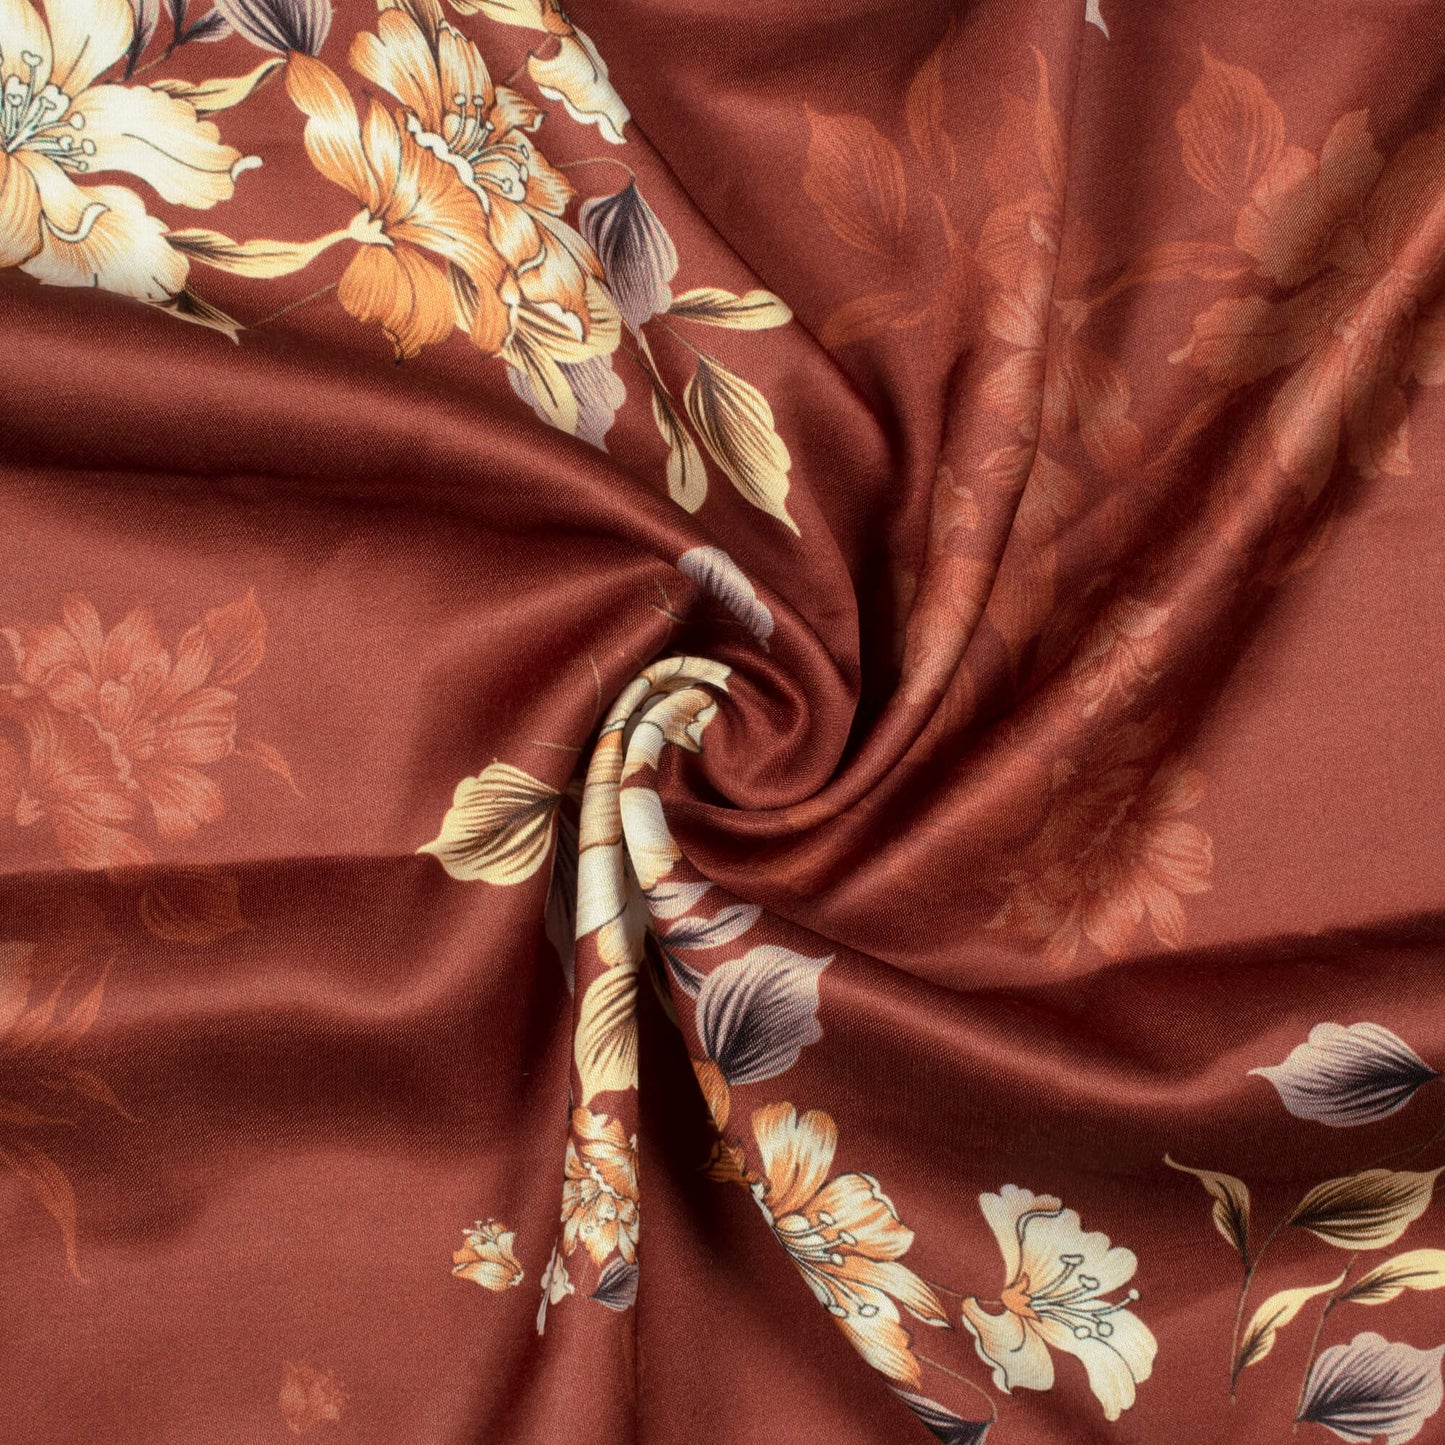 Seal Brown And White Floral Pattern Digital Print Premium Lush Satin Fabric